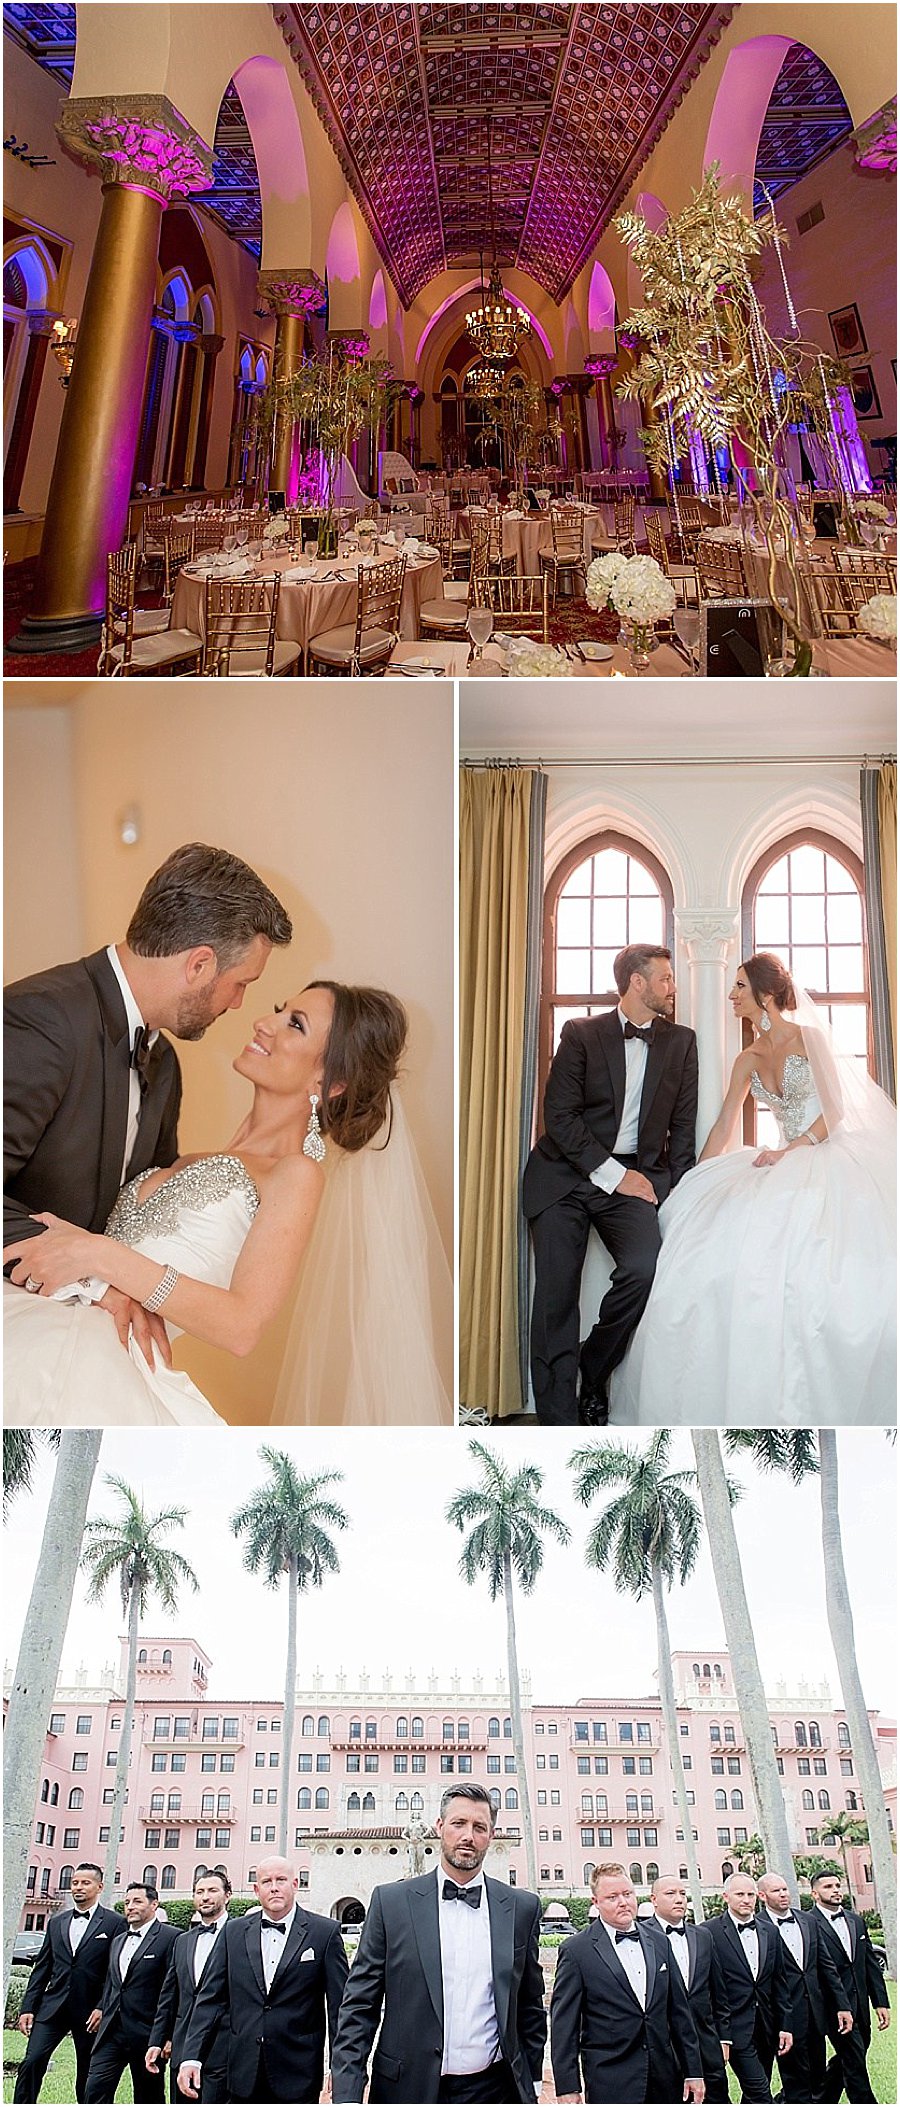 Boca Raton Resort | Top Palm Beach Wedding Venue | Married in Palm Beach | www.marriedinpalmbeach.com | Chris Joriann Photography